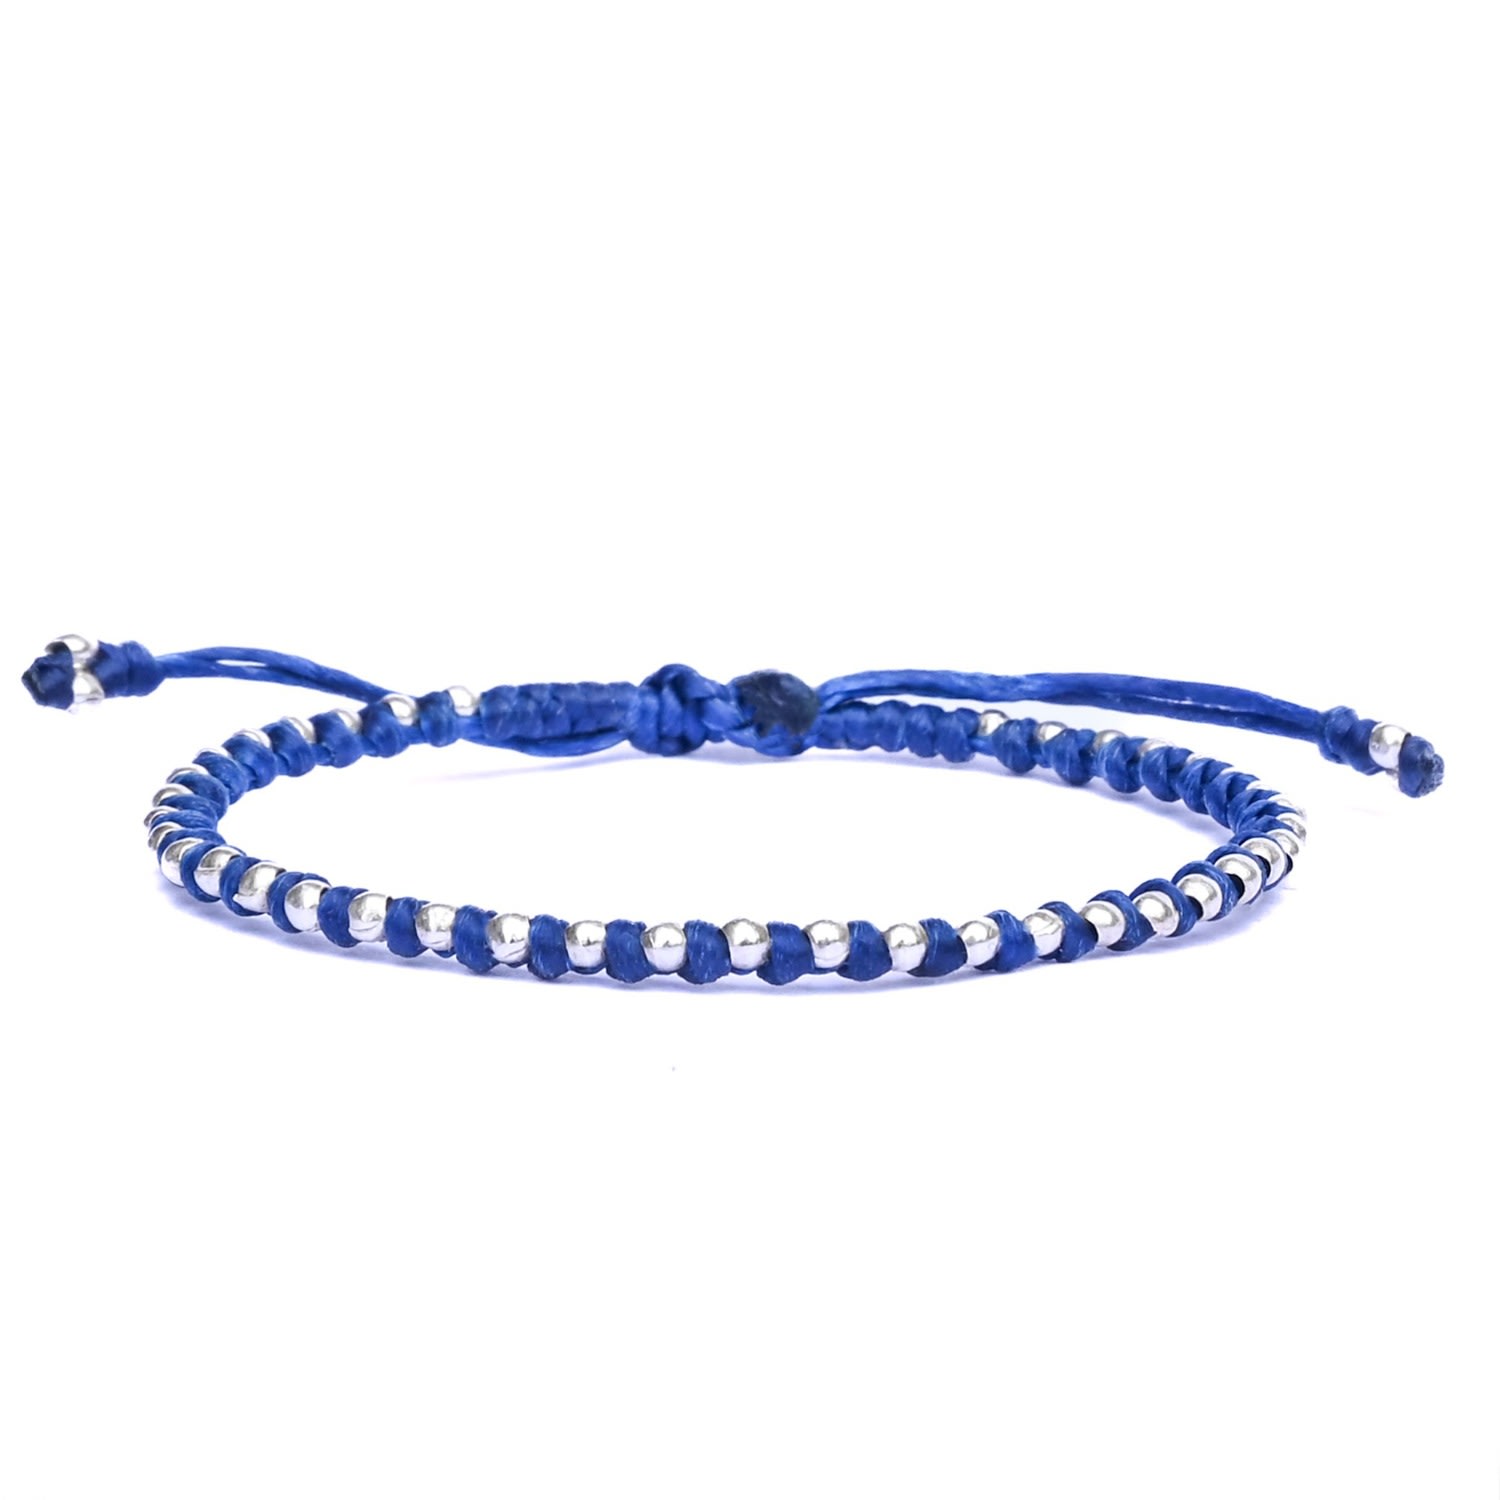 Women’s Dainty Blue Handmade Friendship Bracelet With Tiny Silver Beads - Spitafields Harbour Uk Bracelets